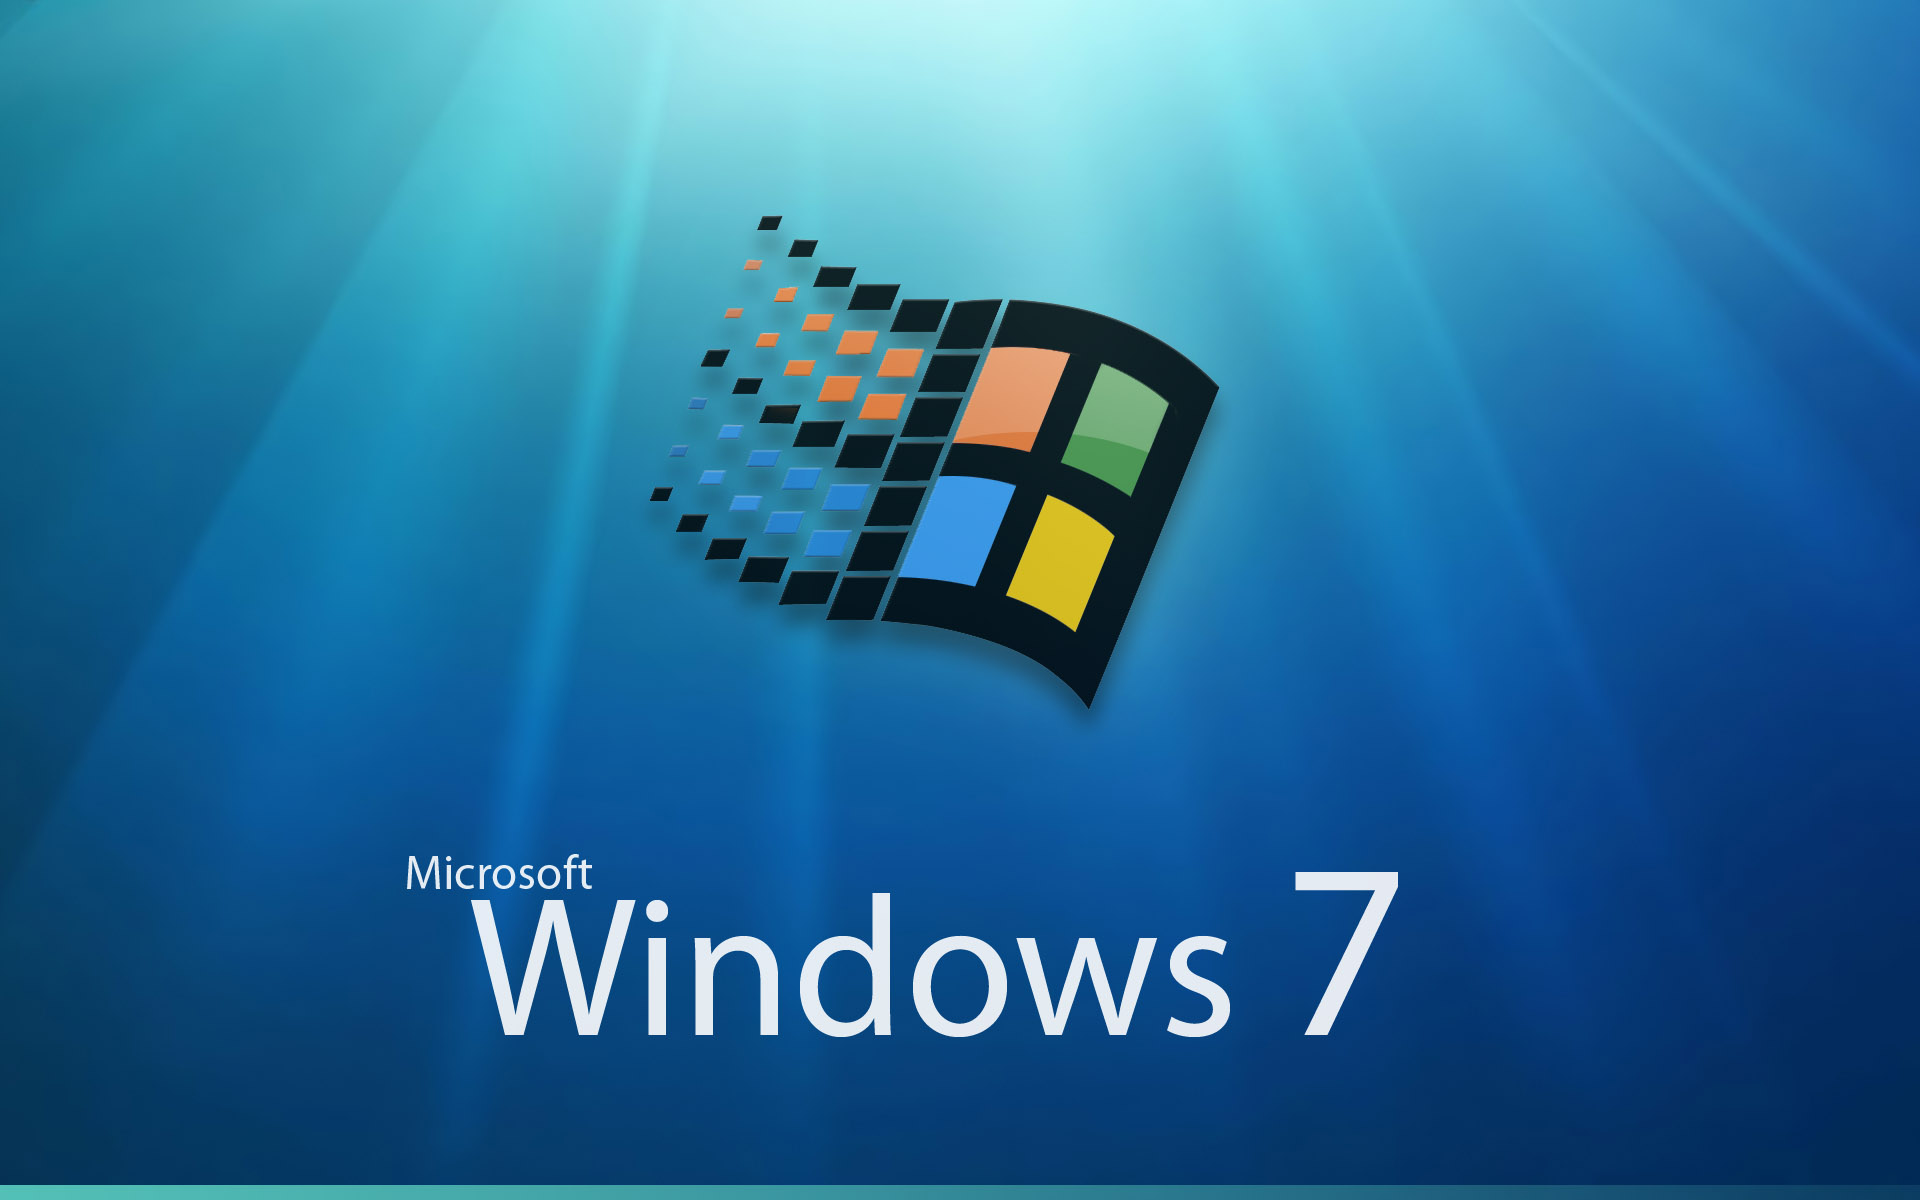 Windows 7 wallpaper - 599864